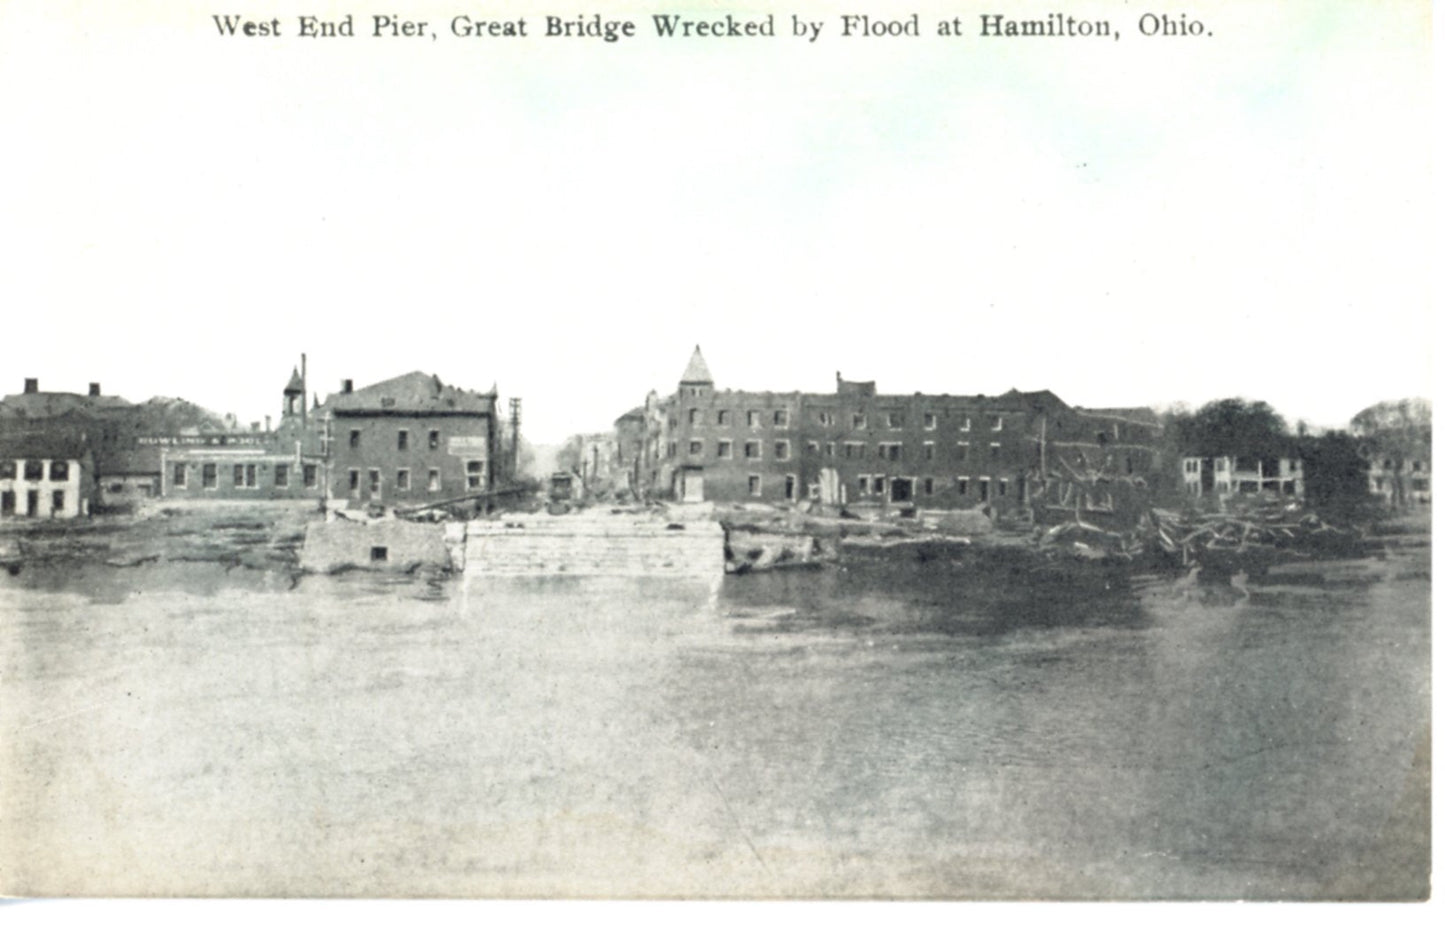 Flood Damage "West End Pier, Great Bridge Wrecked" Great Flood Disaster of 1913 HAMILTON OHIO Antique Real Photo Postcard